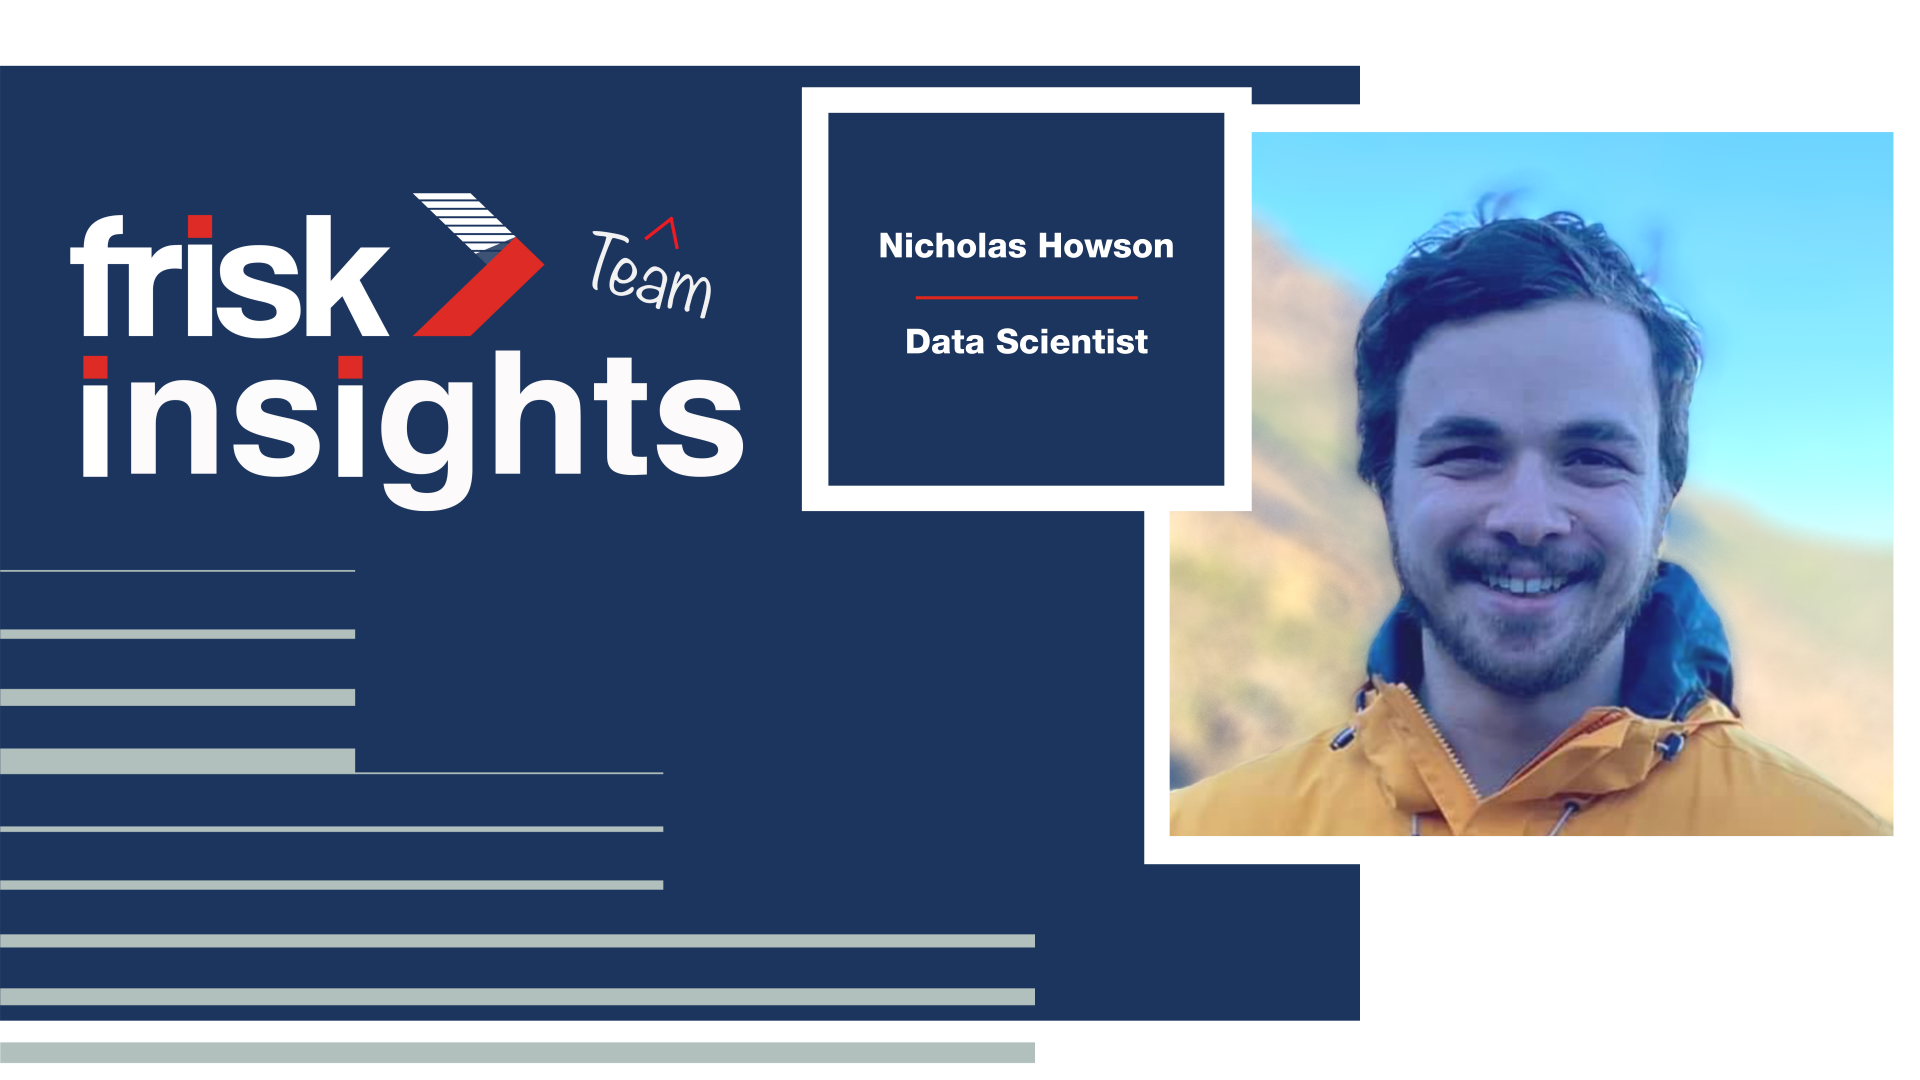 Frisk Team Insights: Nicholas Howson, Data Scientist